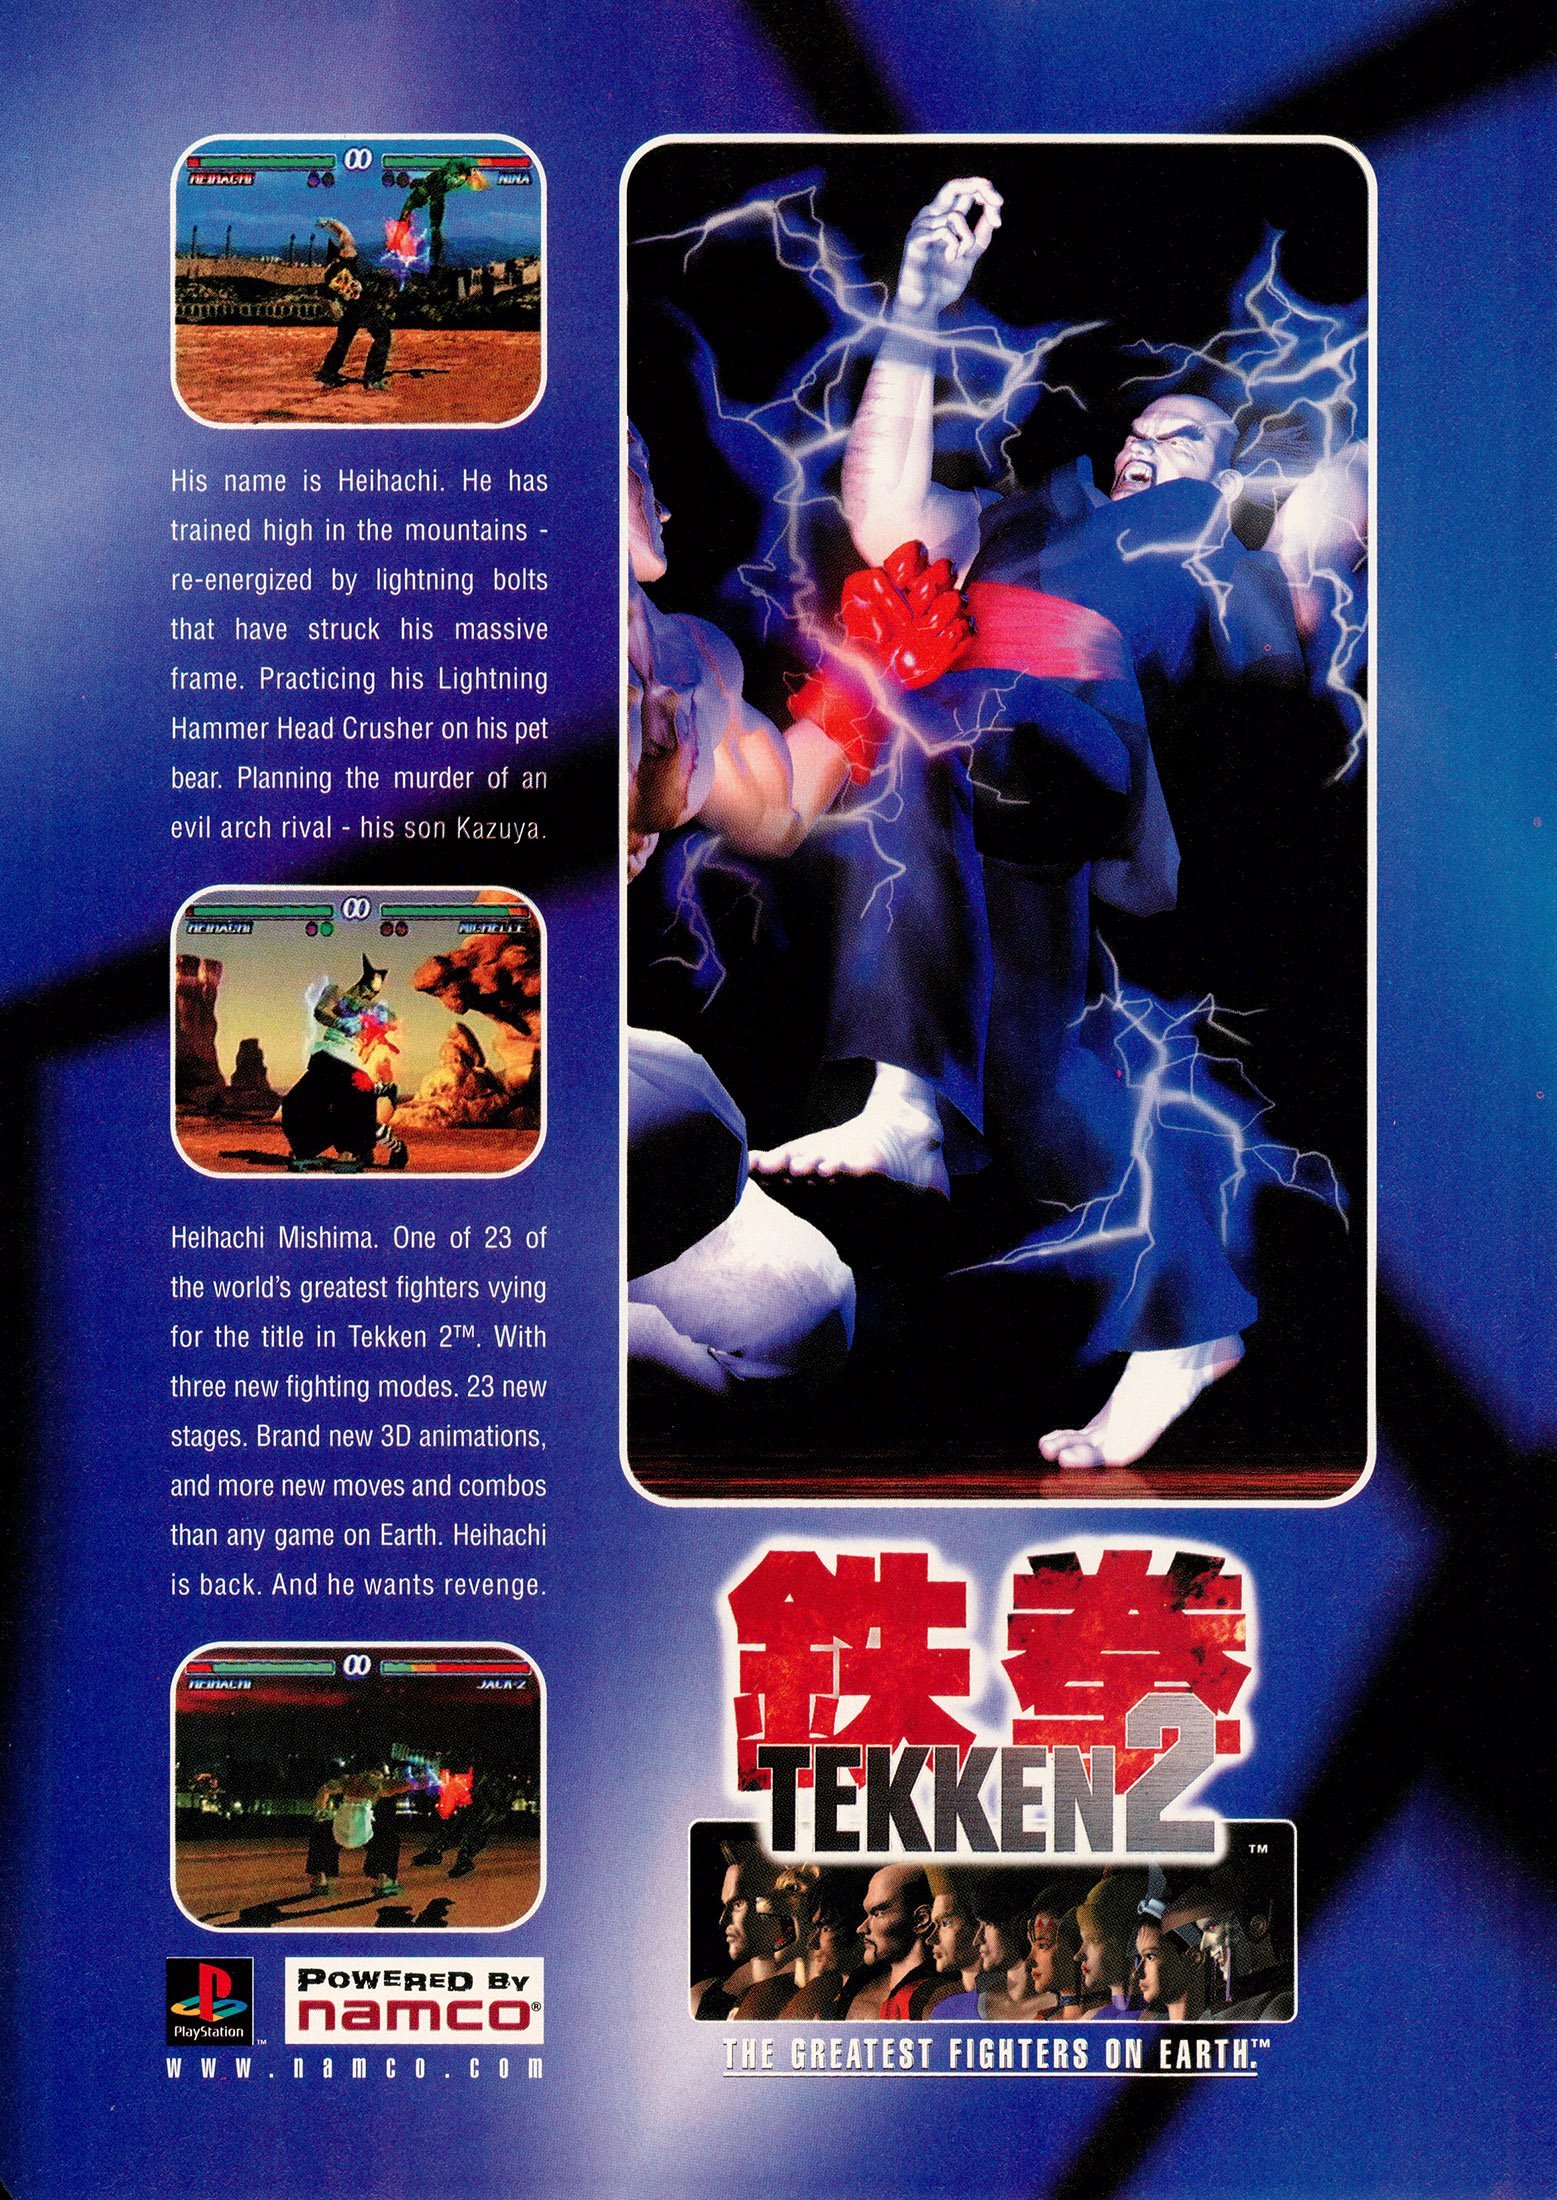 TEKKEN 2 - Art Gallery - Posters / Box Art  Tekken 2, Fighting games,  Video game images